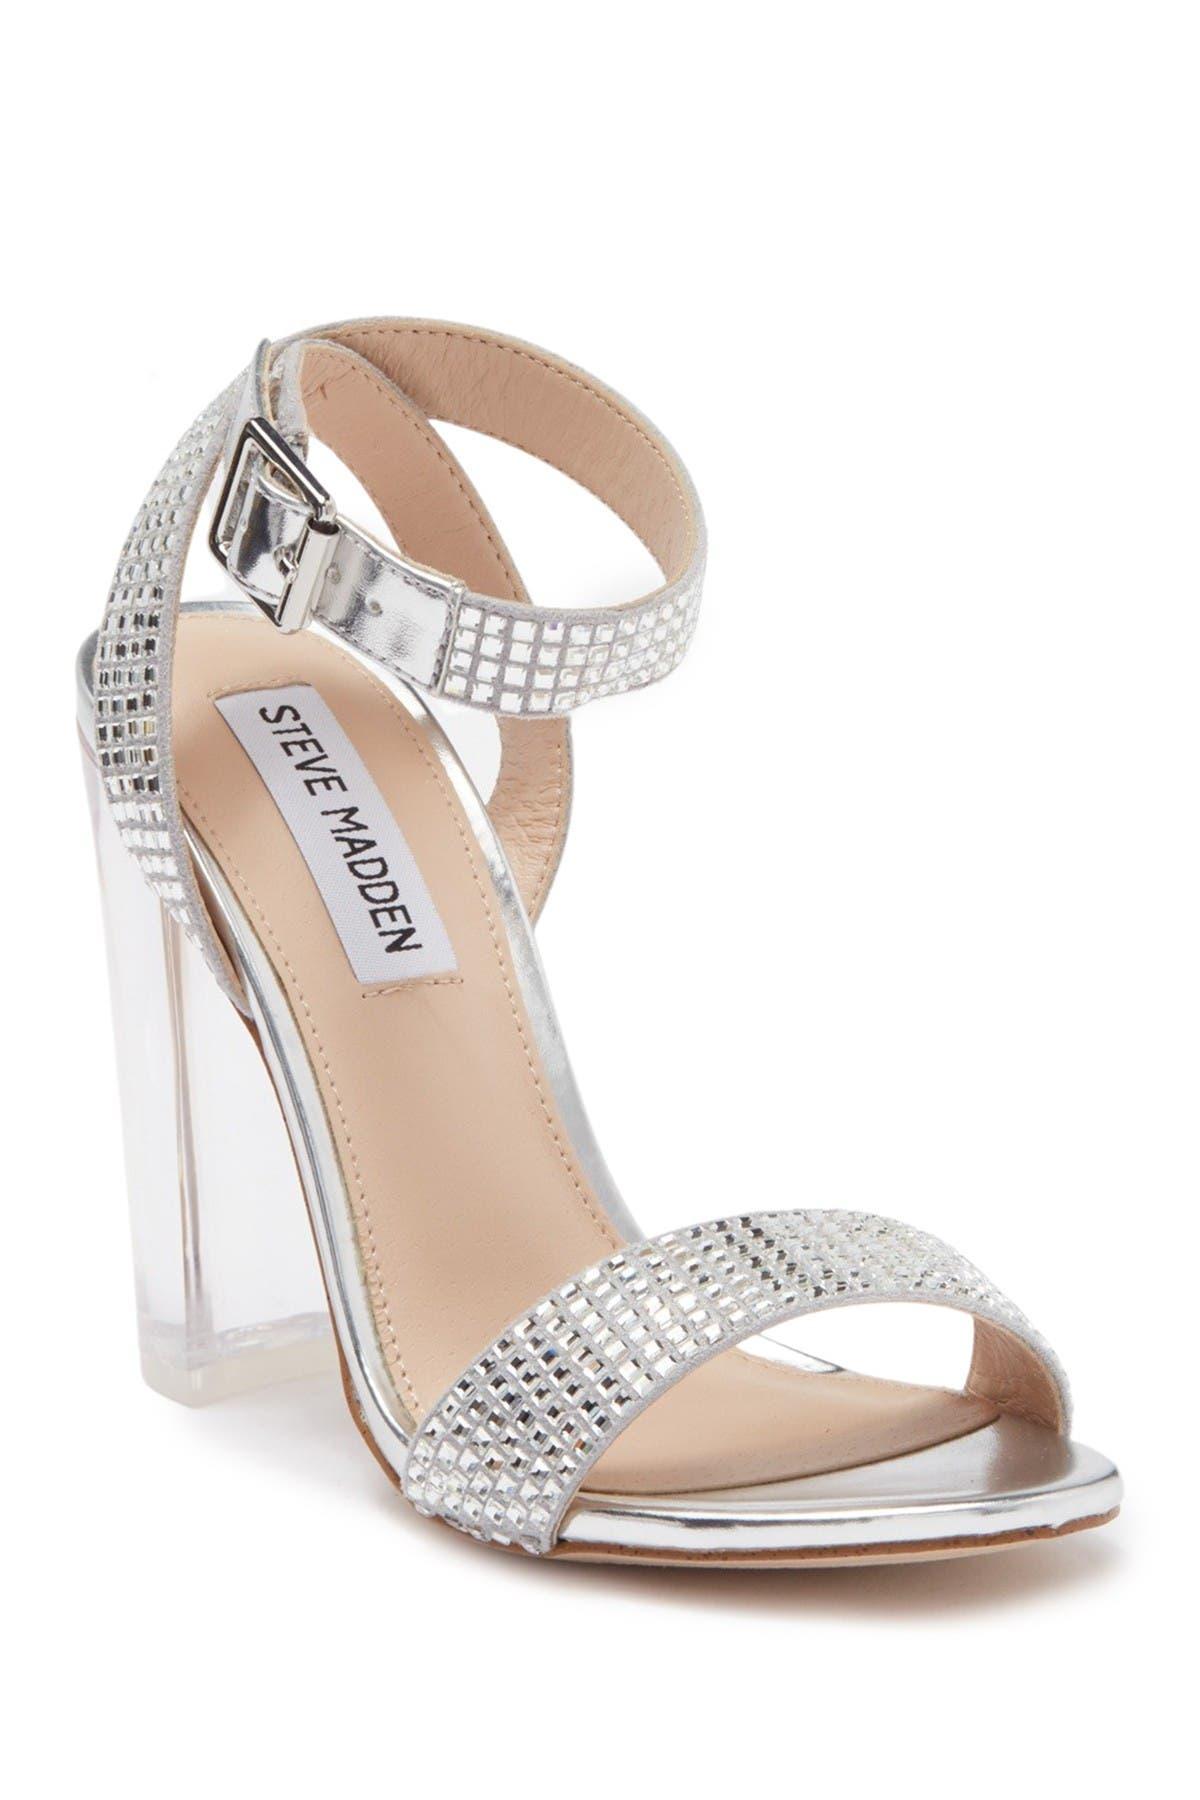 Girl's “Lucky Top” 2” Block Heel Rhinestone Dress Sandals